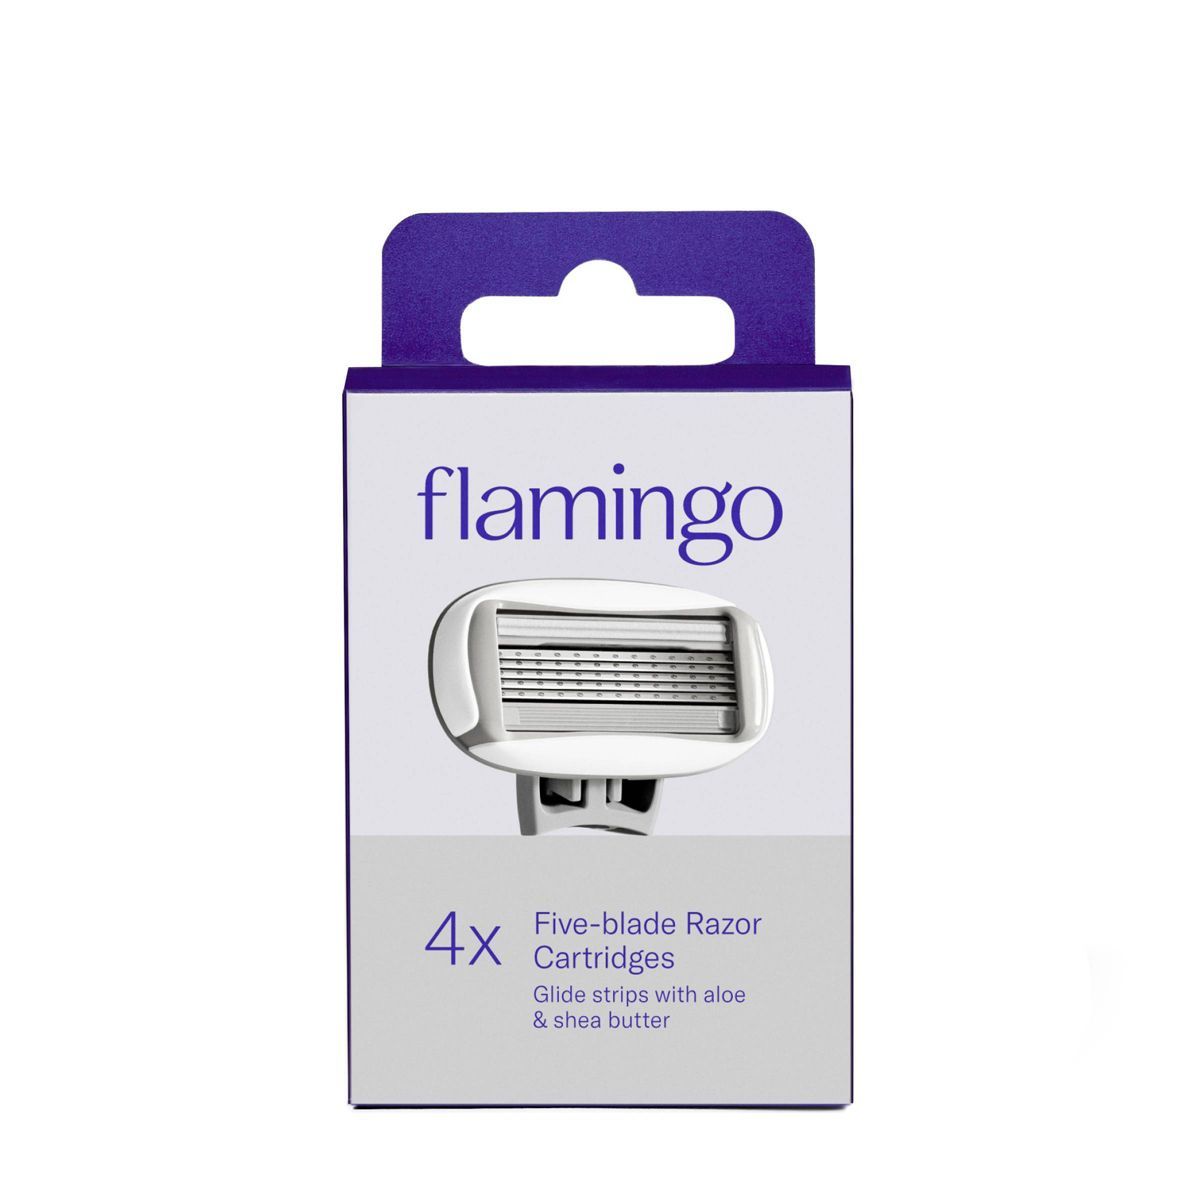 Flamingo Women's Razor Blade Refills - 5-Blade Refill Cartridges - 4ct | Target